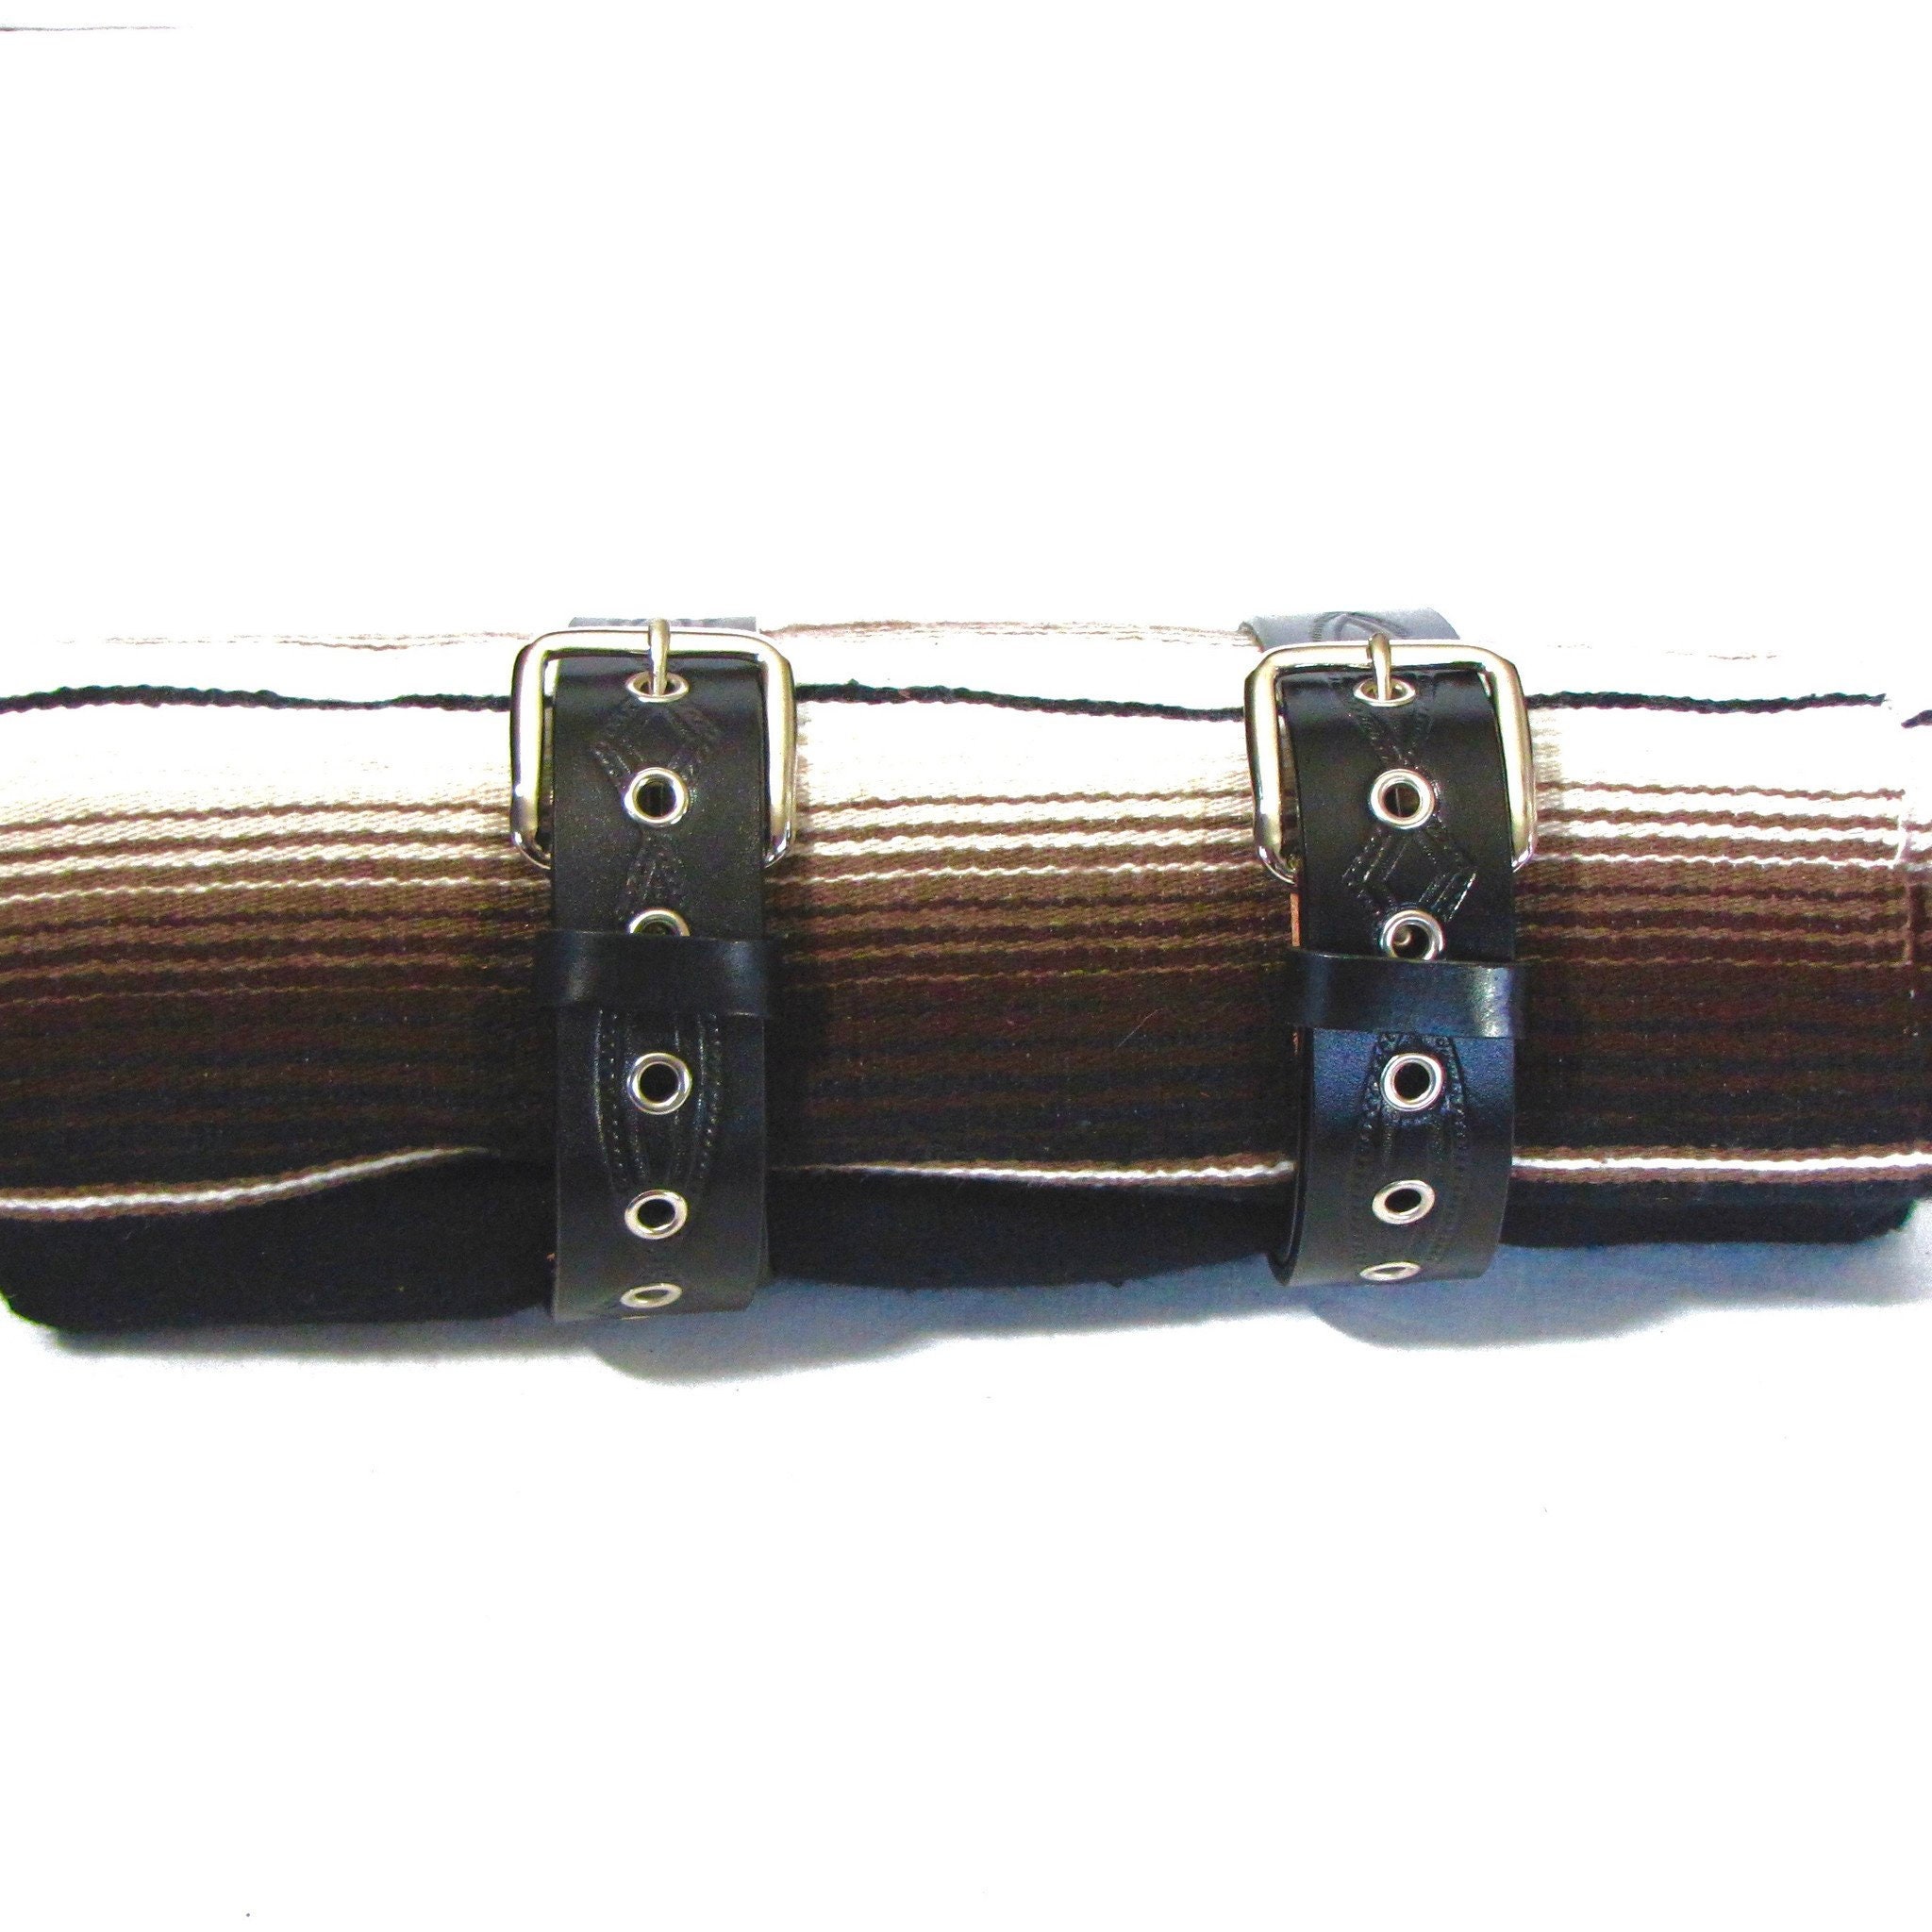 Golgotha Leather blanket roll straps